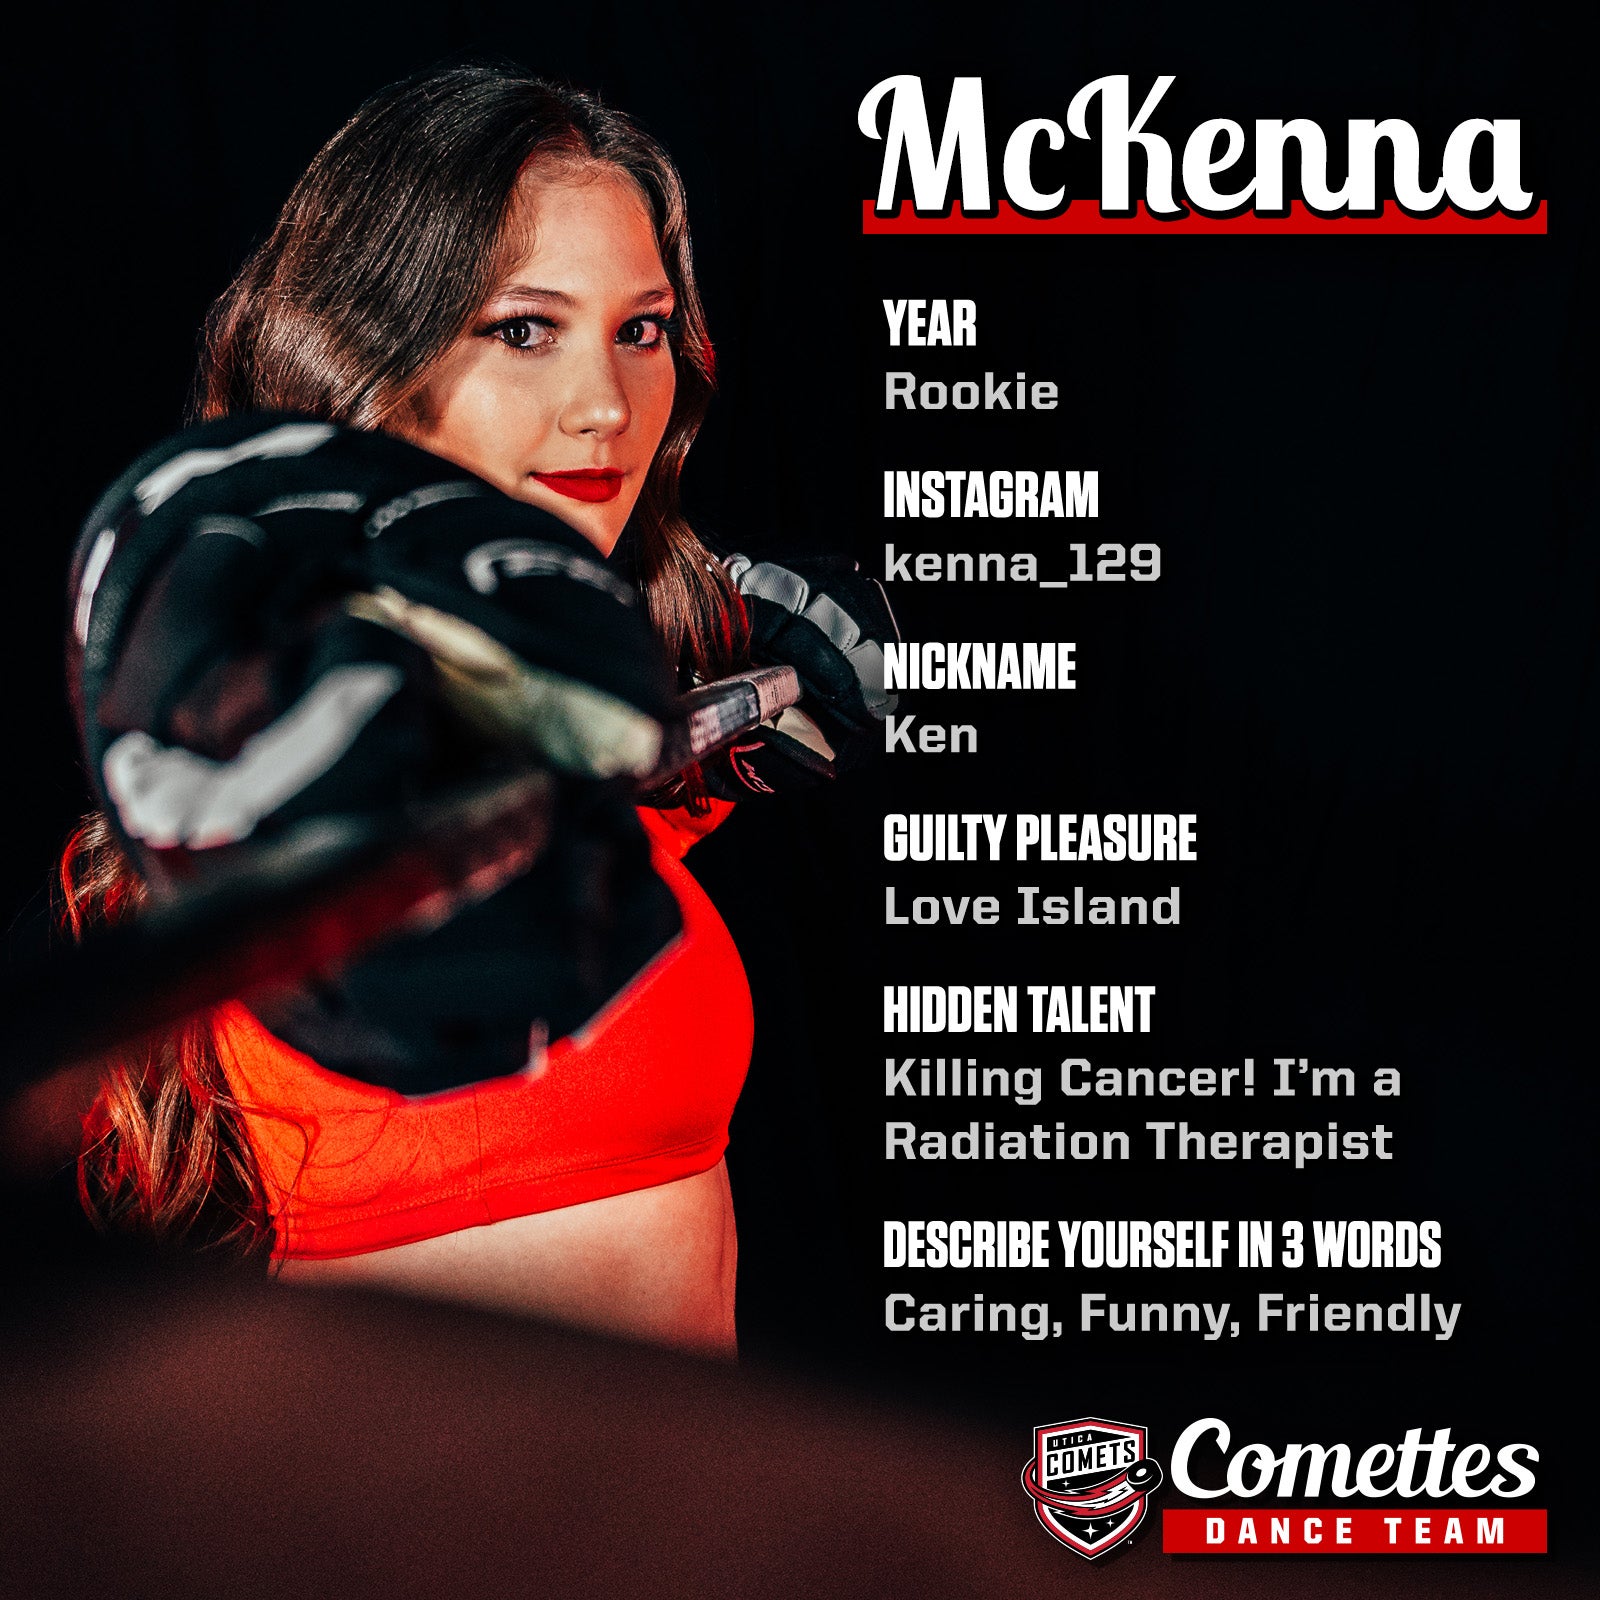 Meet The Comettes_Template_McKenna copy.jpg